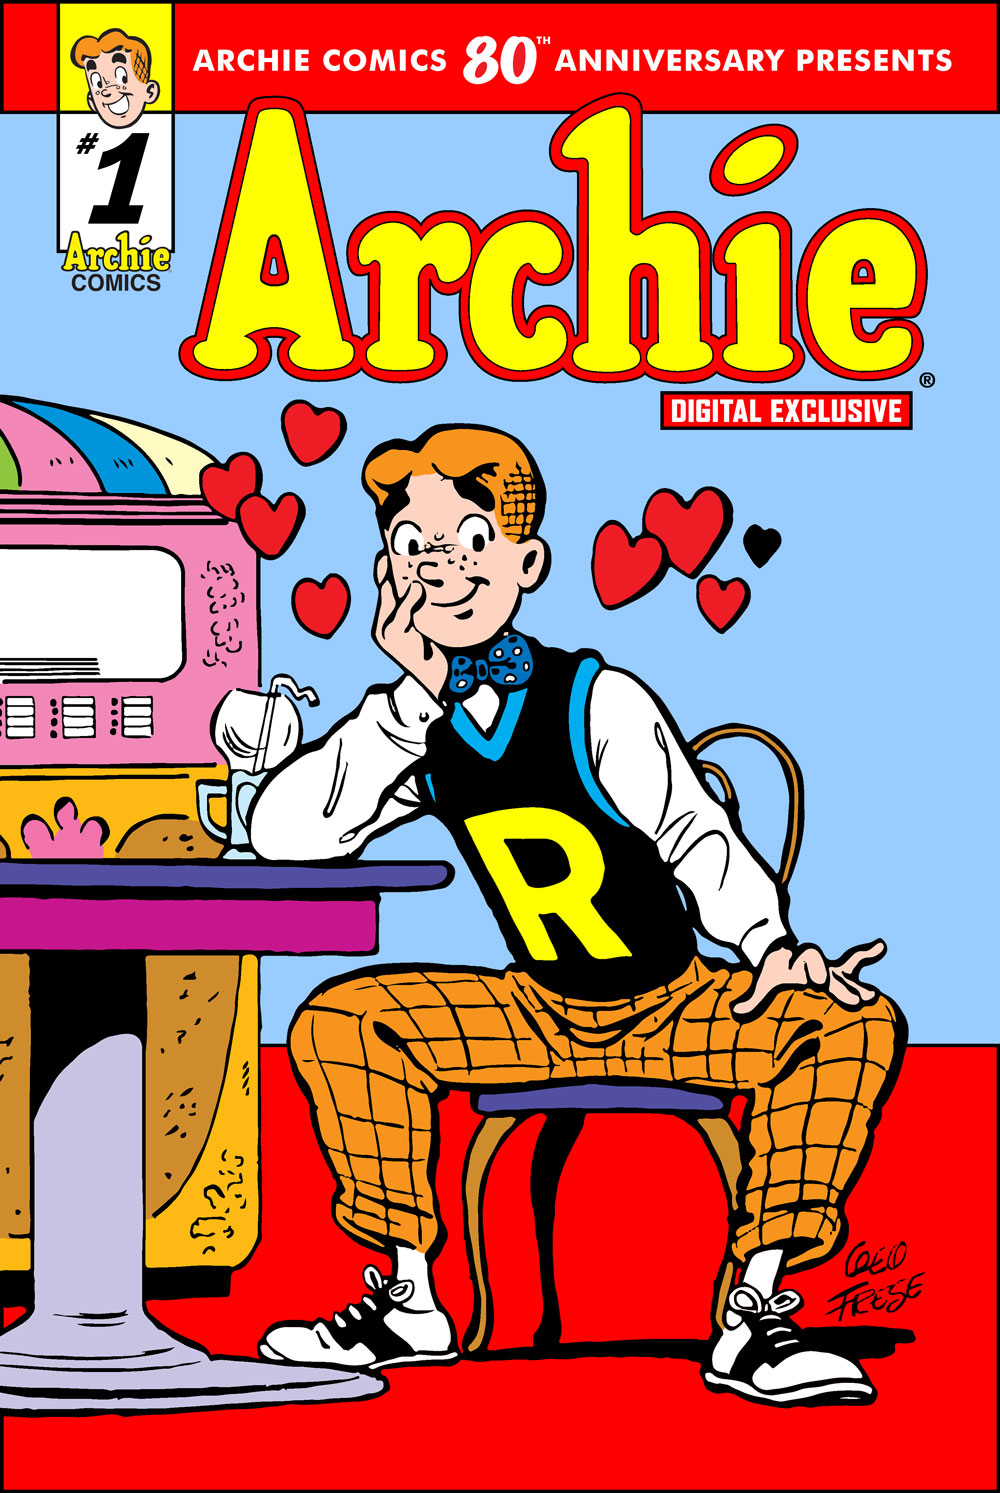 Archie Comics Spotlights Characters in Digital Exclusives - Comix Asylum